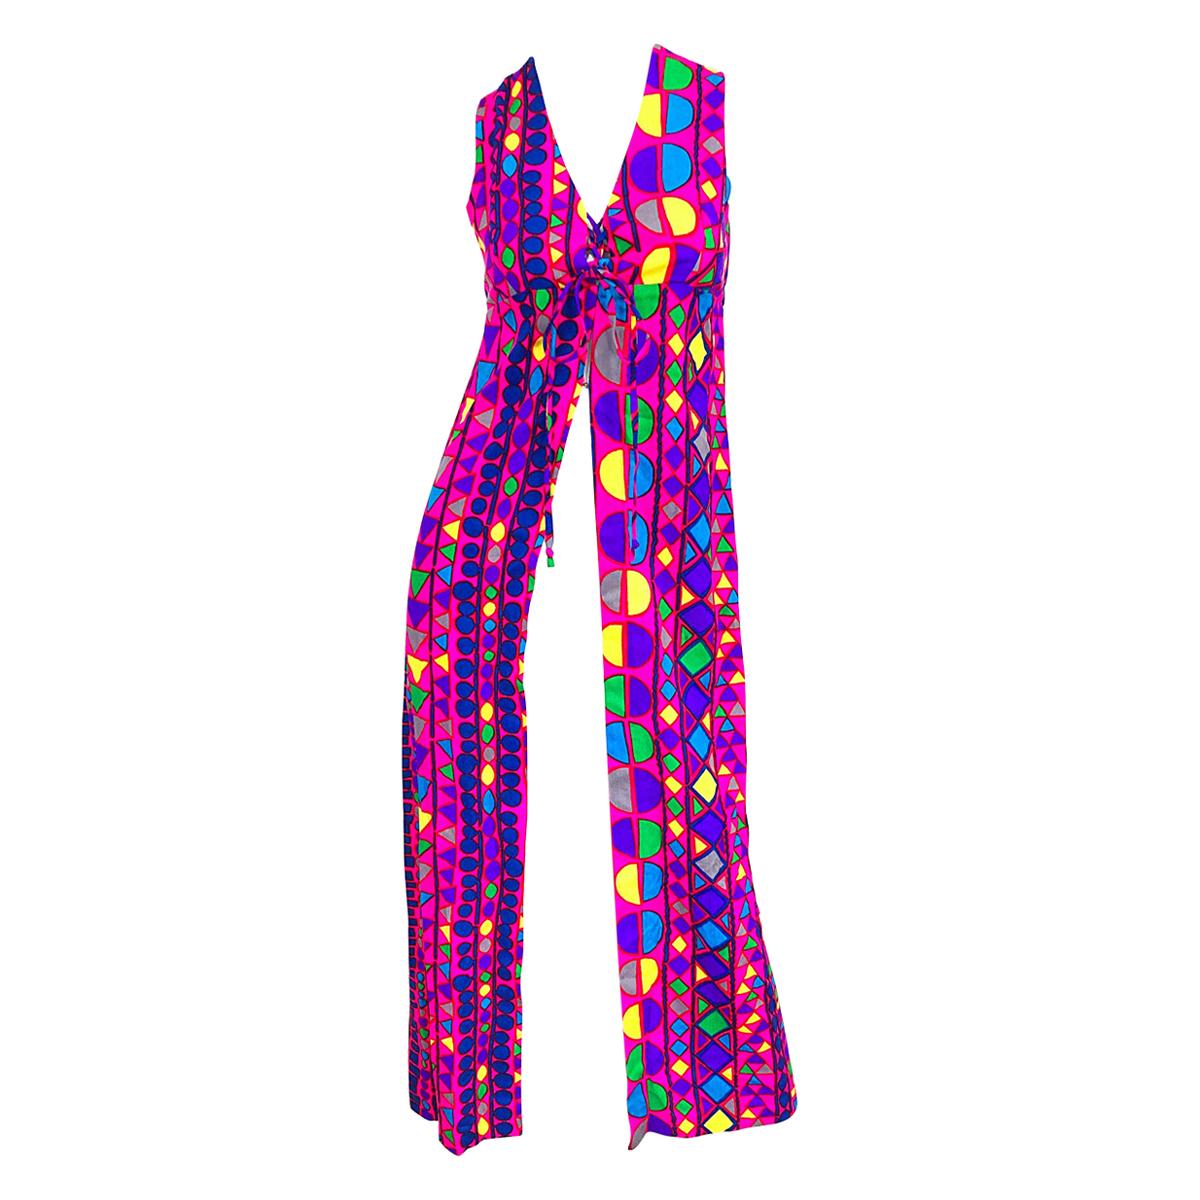 Amazing 1970s Joseph Magnin Vibrant Colorful Abstract Mosaic Vest 70s Maxi Dress For Sale